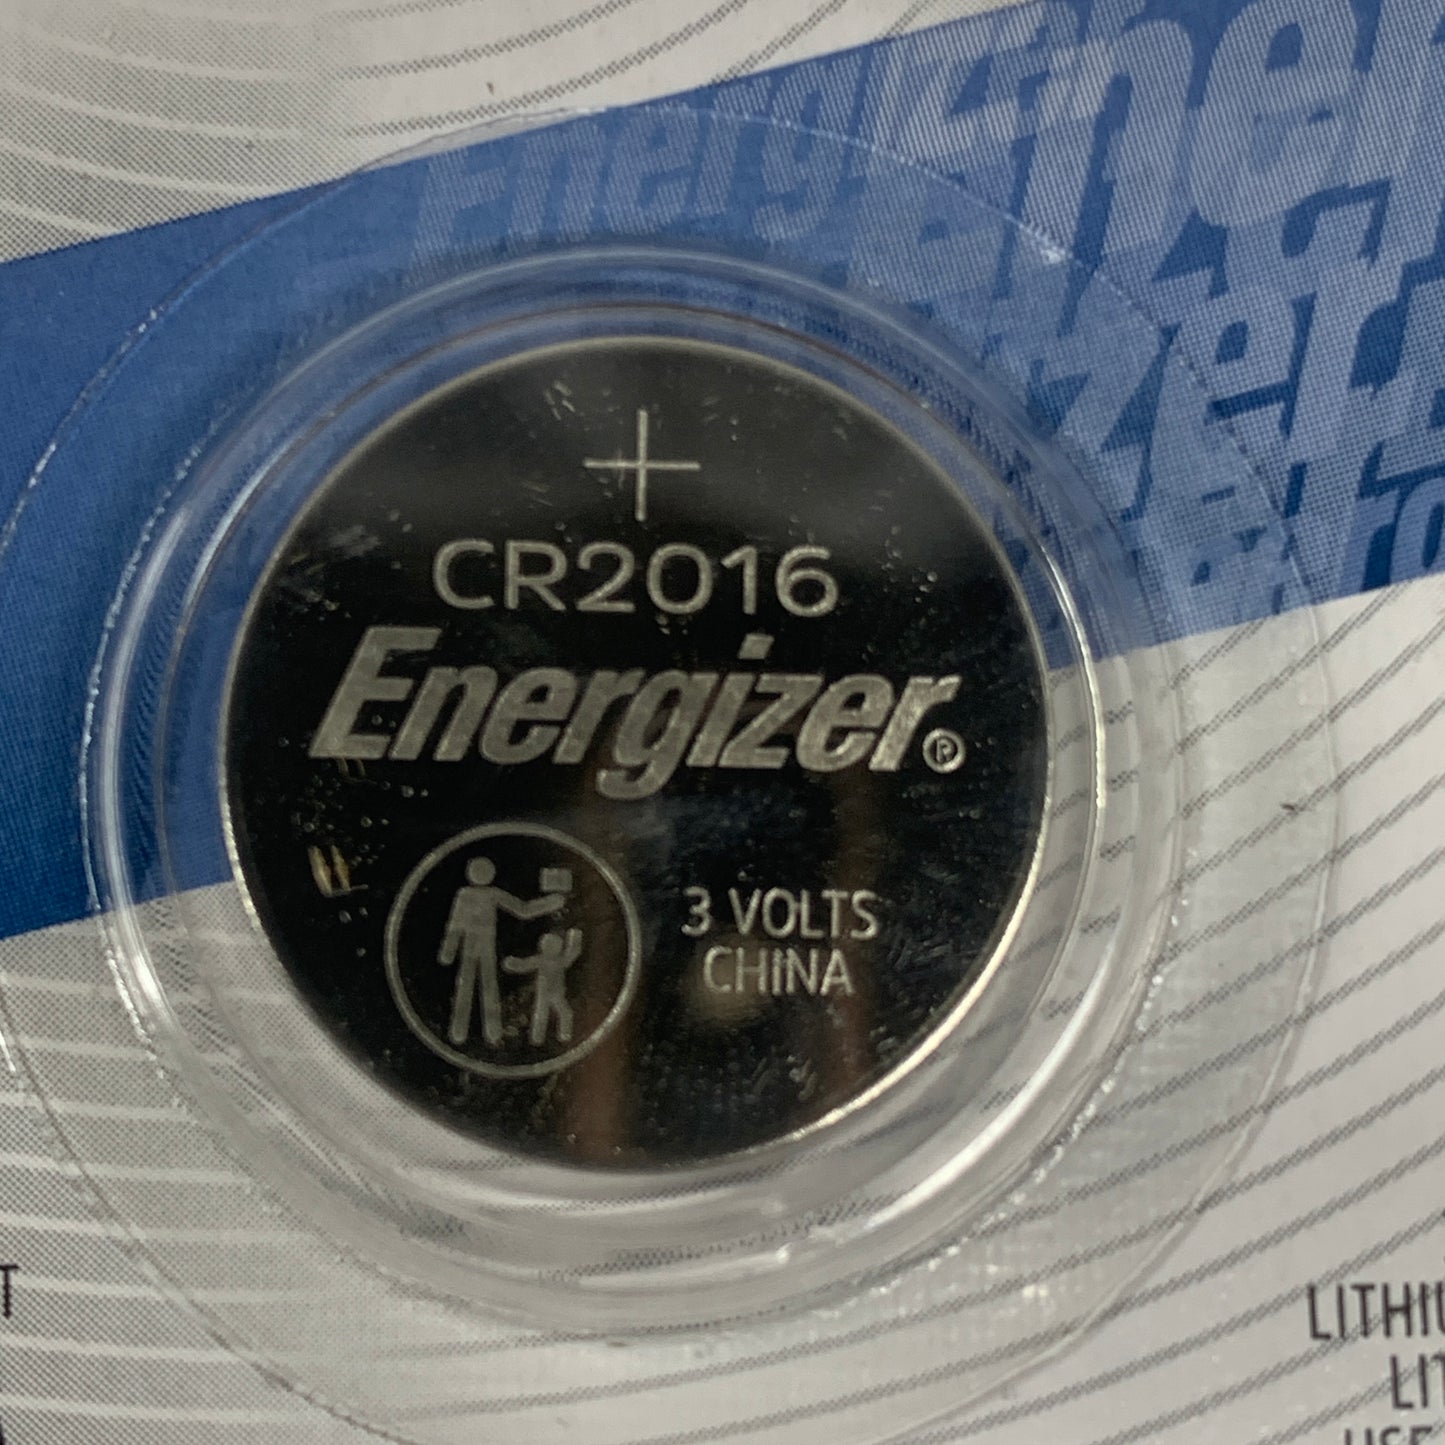 ENERGIZER (4 PACK) Lithium Coin 3 Volt 2016 Battery ECR2016BP